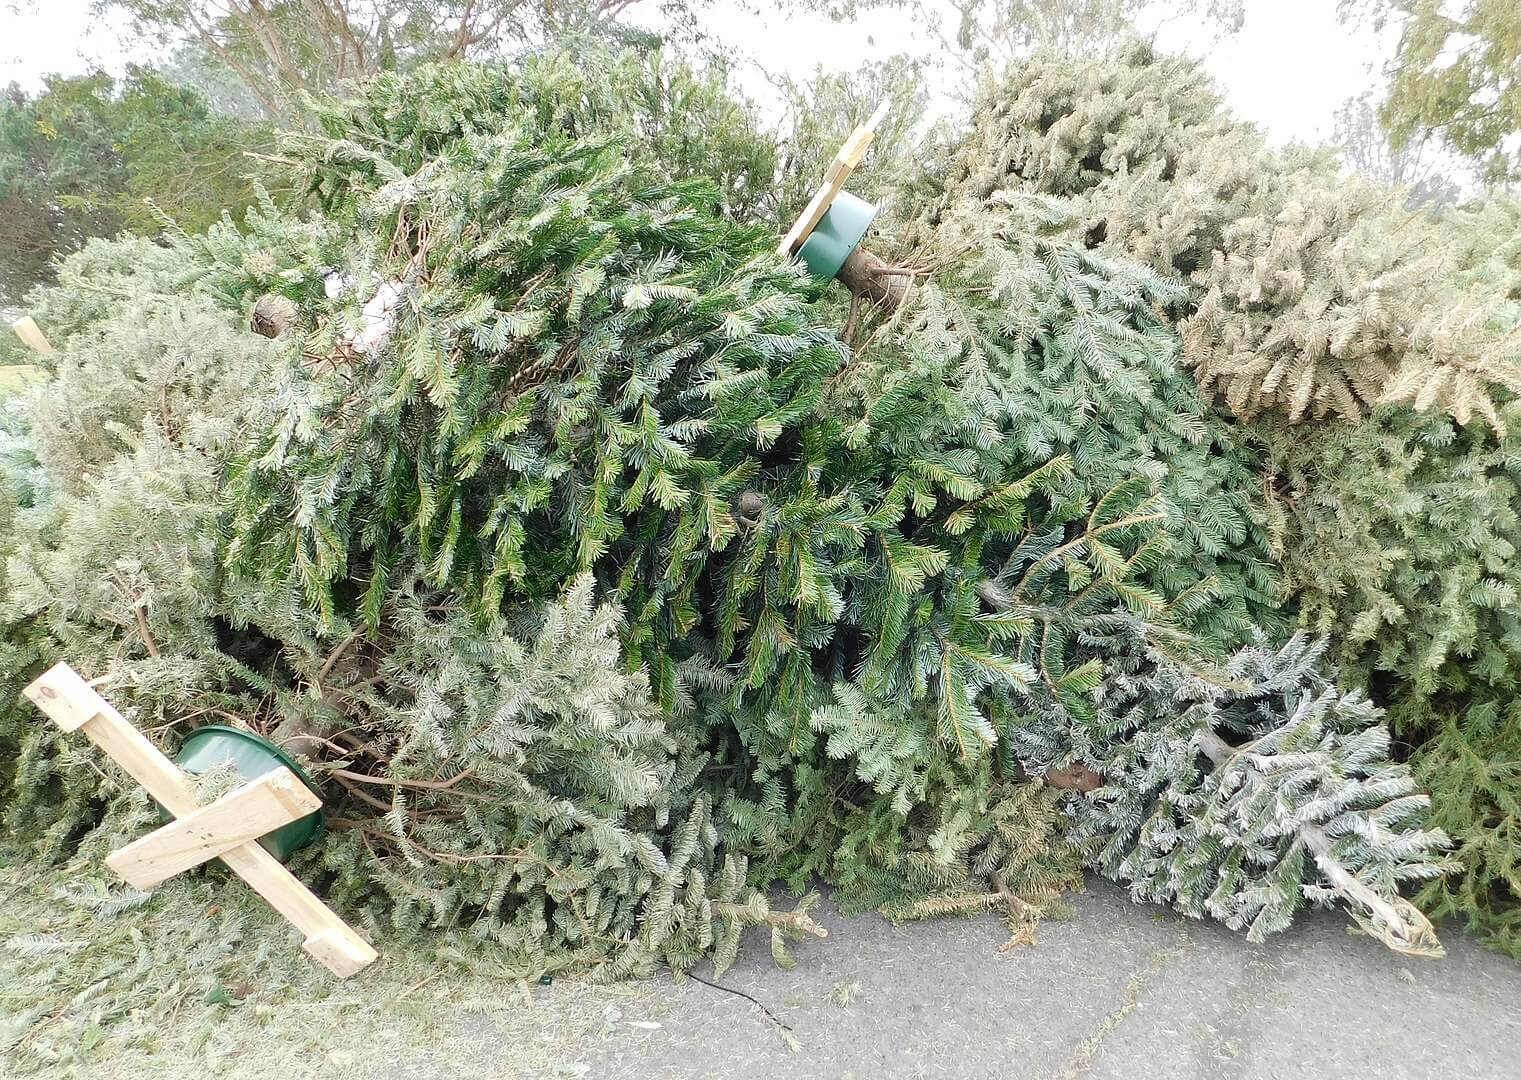 1521px-Christmas_tree_recycling_1.jpg